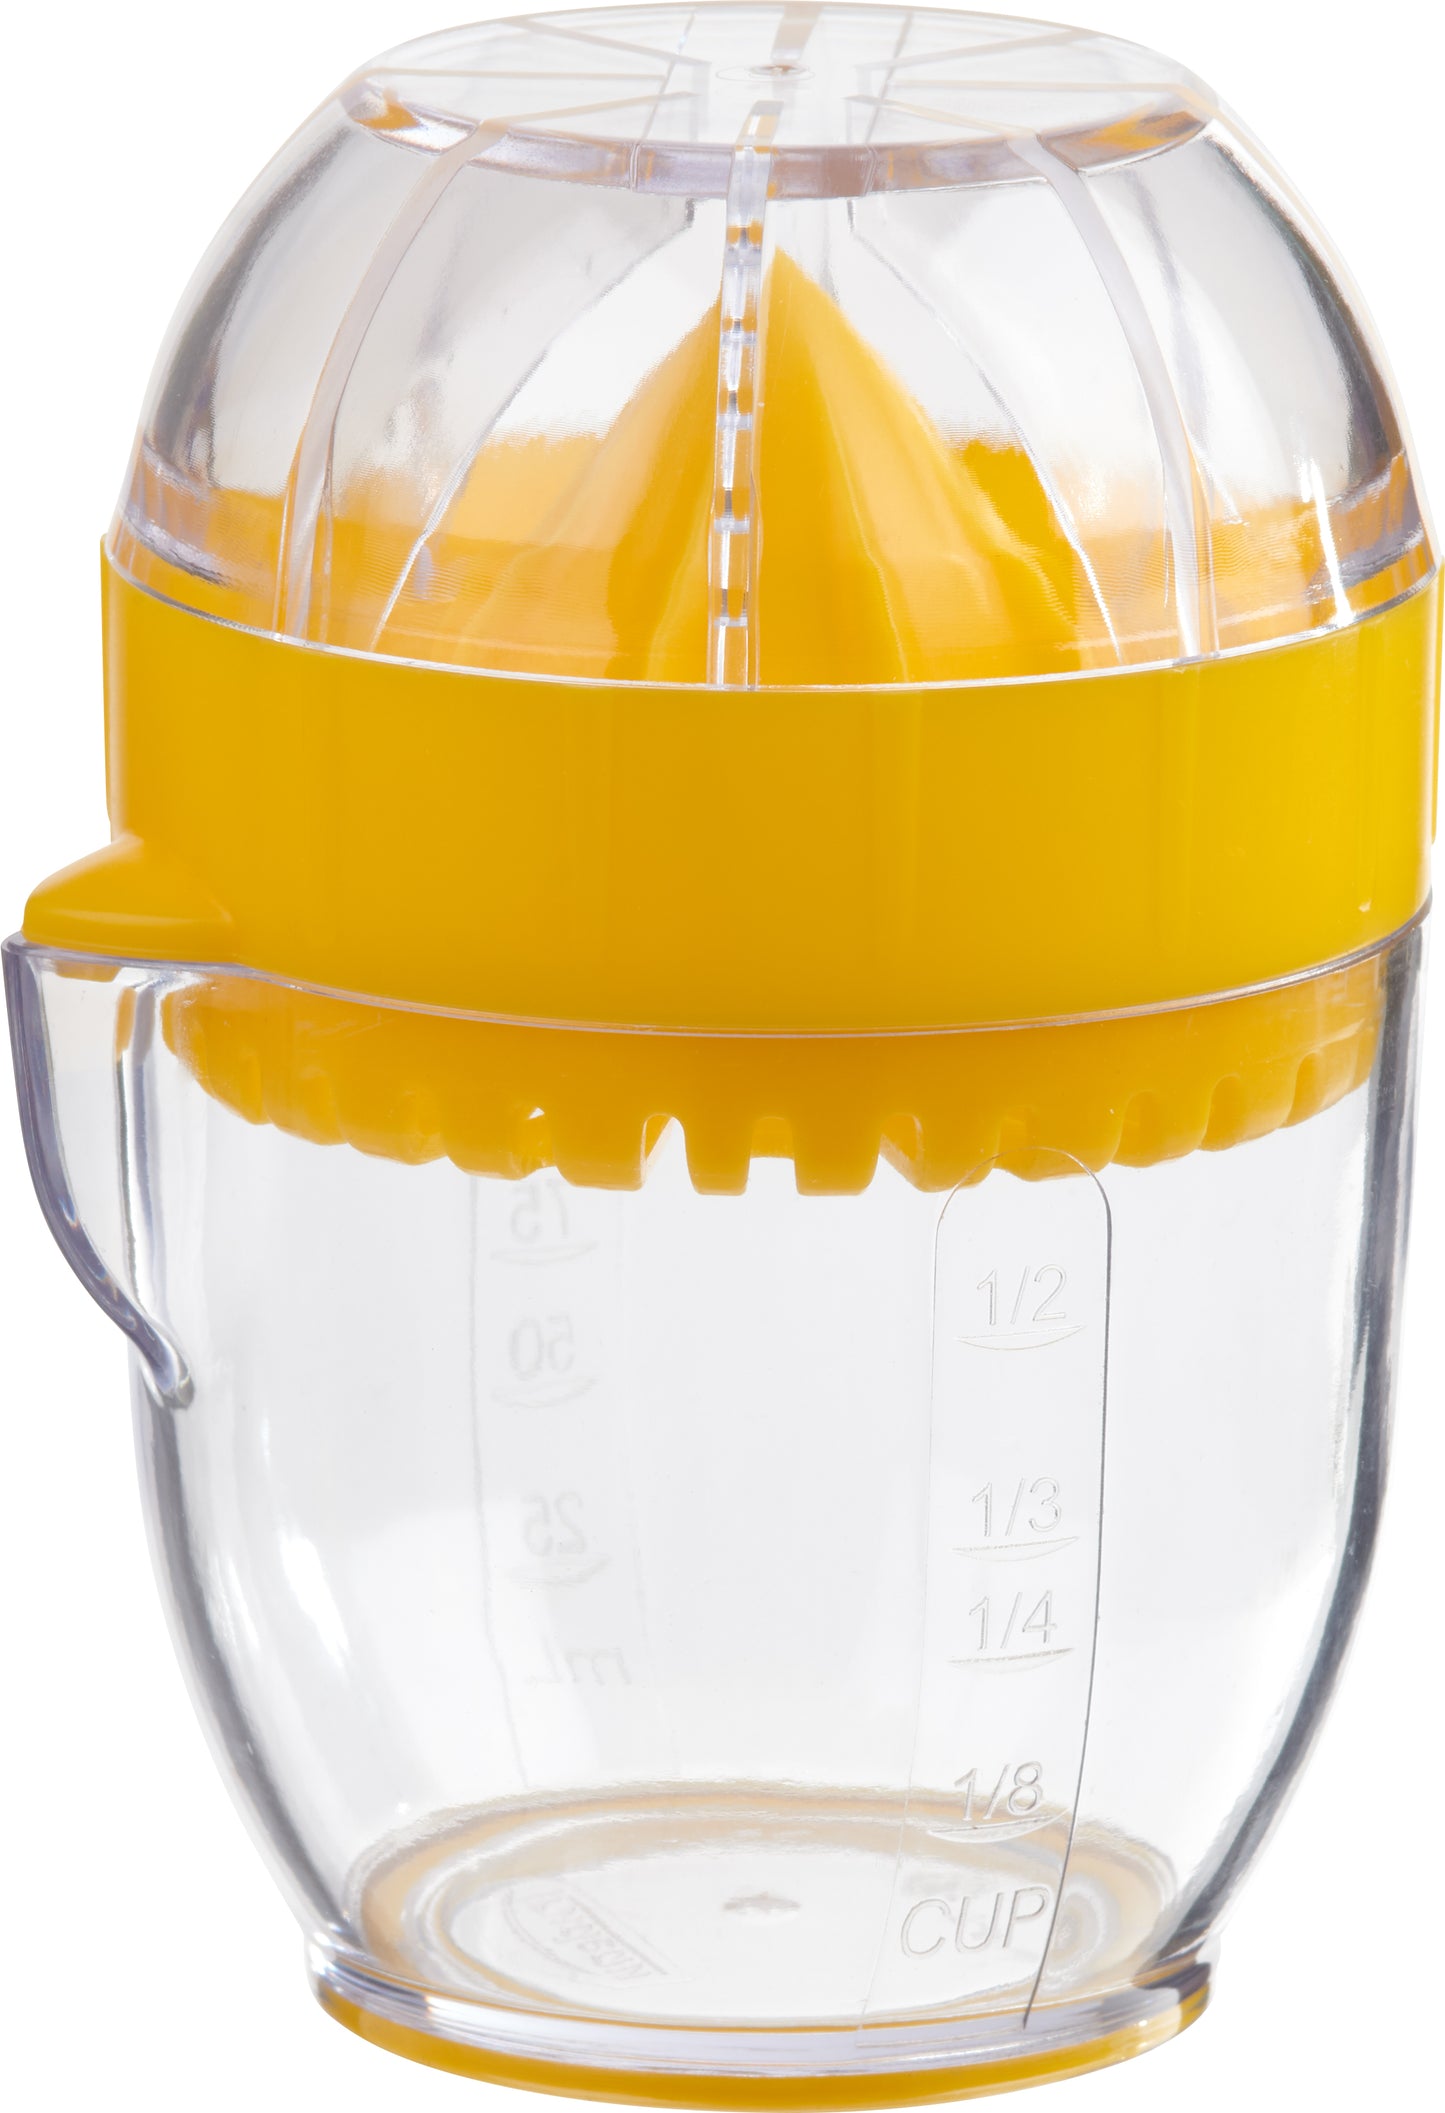 TRUDEAU Citrus Juicer with Storage